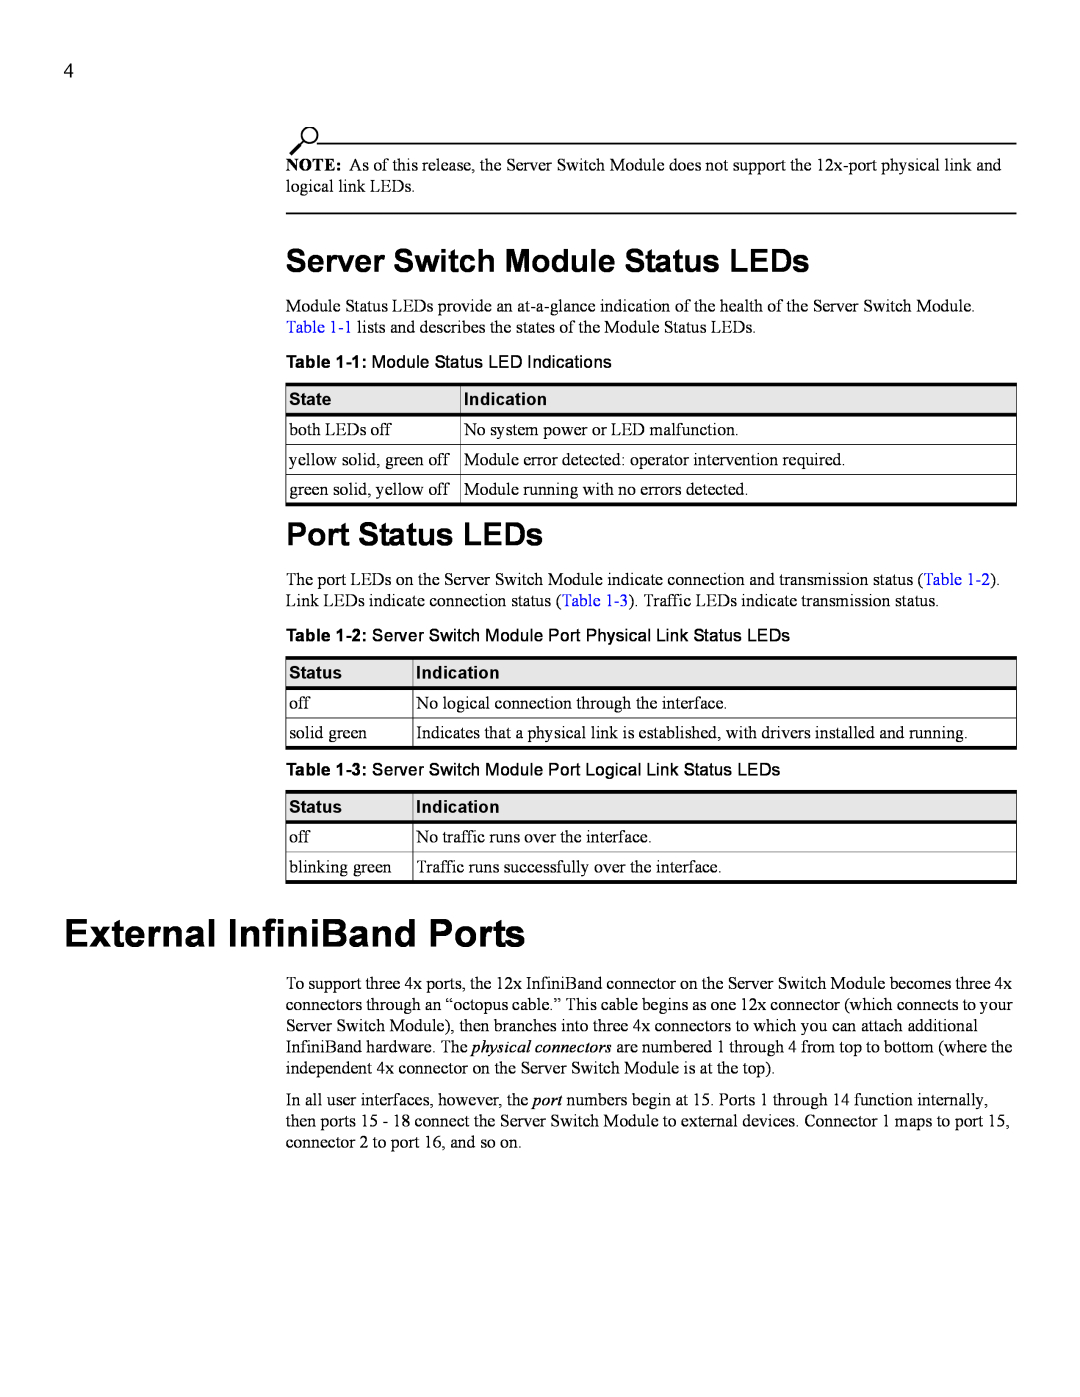 IBM 24R9718 IB manual External InfiniBand Ports, Server Switch Module Status LEDs, Port Status LEDs, State, Indication 